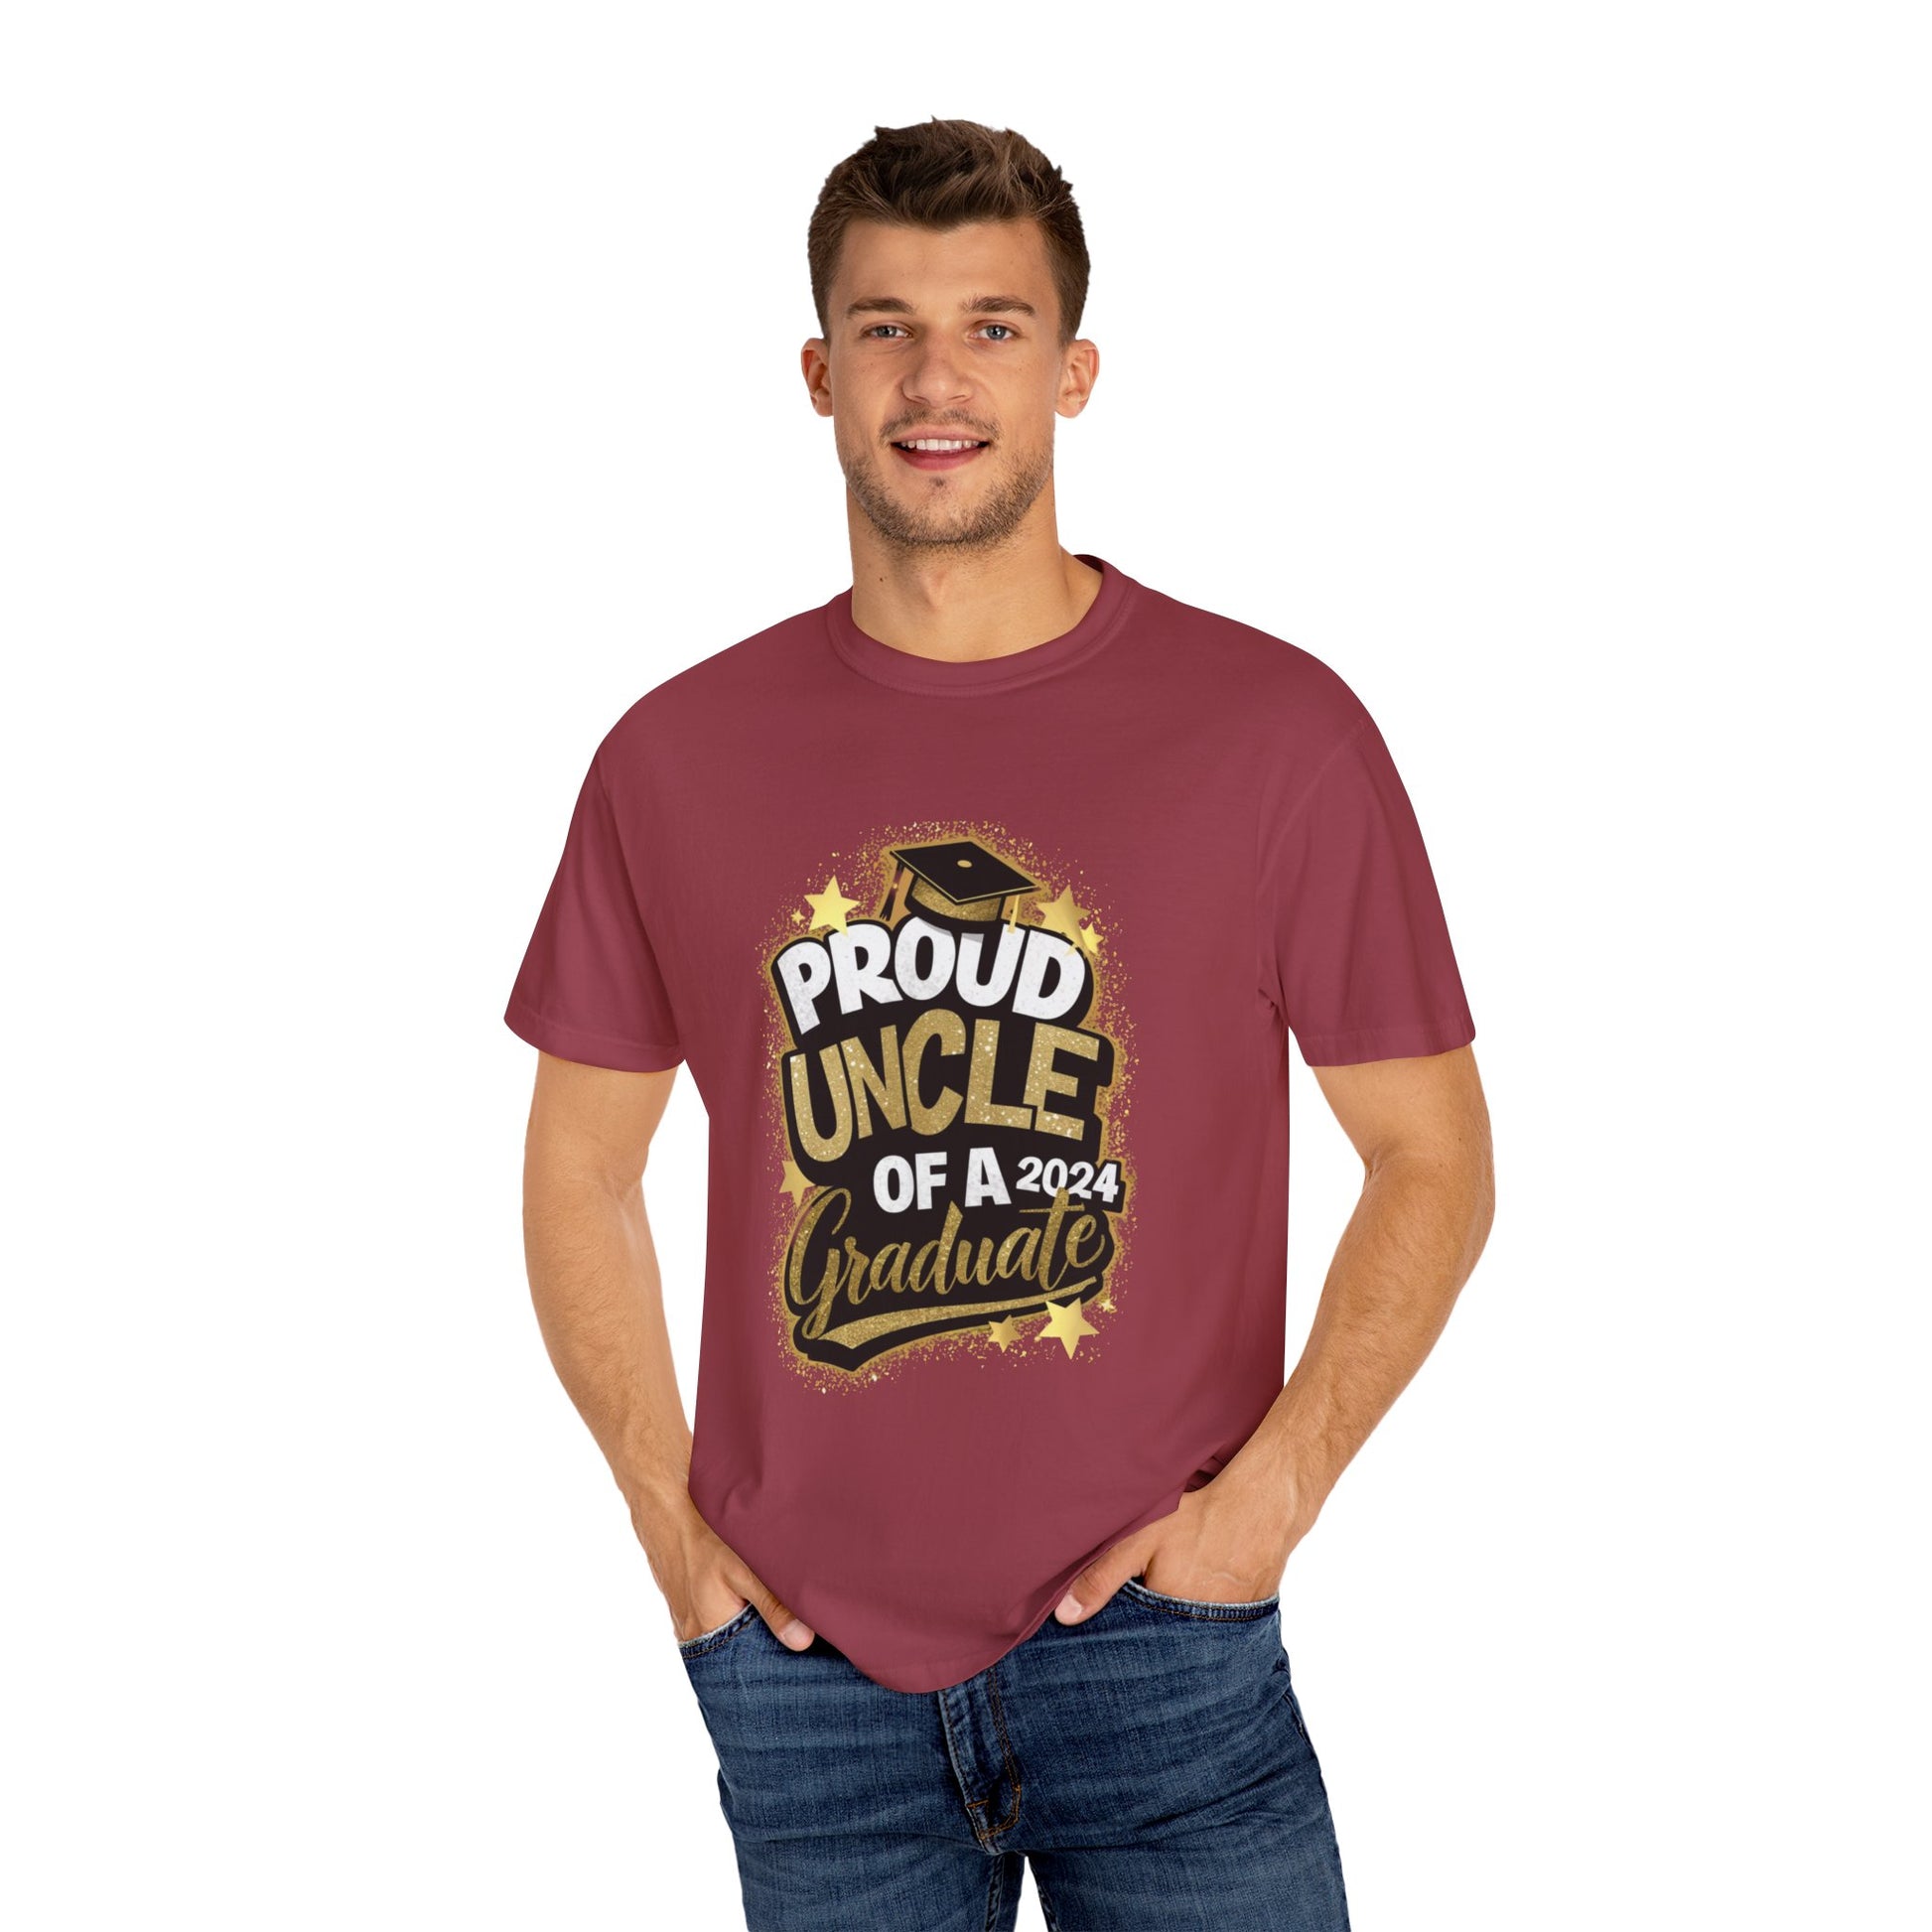 Proud Uncle of a 2024 Graduate Unisex Garment-dyed T-shirt Cotton Funny Humorous Graphic Soft Premium Unisex Men Women Chili T-shirt Birthday Gift-36